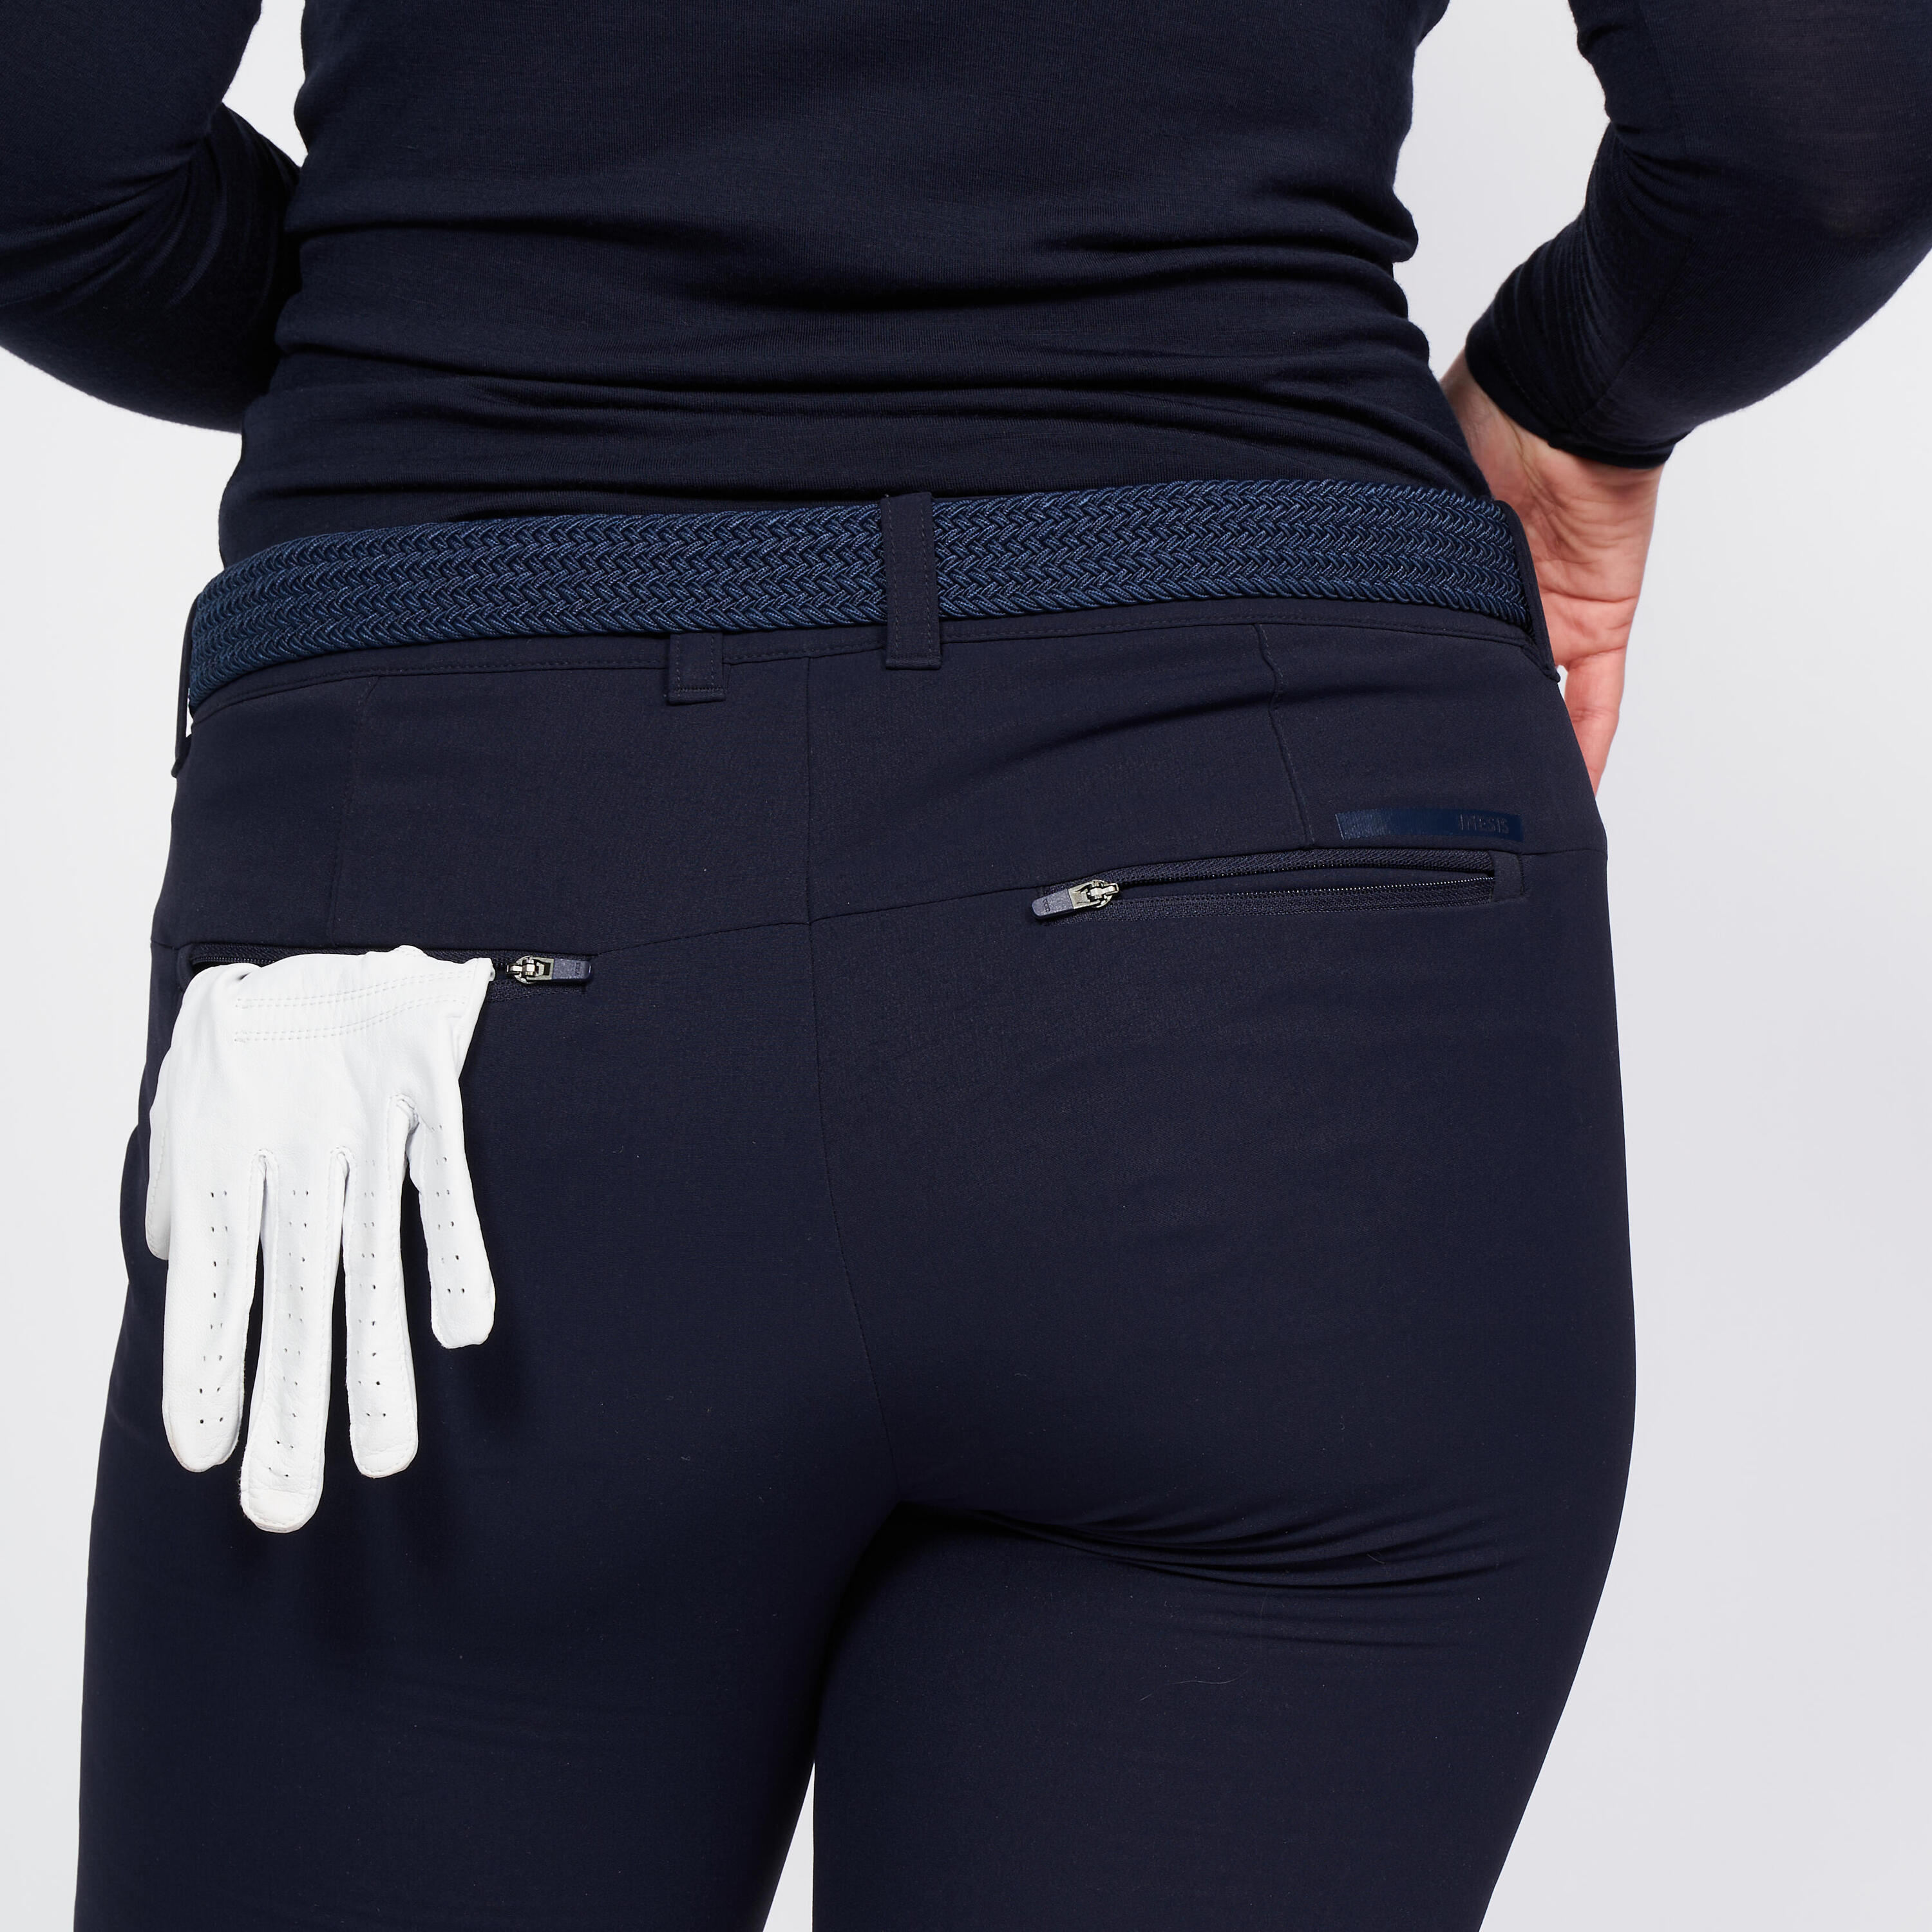 Women's golf winter trousers - CW500 navy blue 4/6